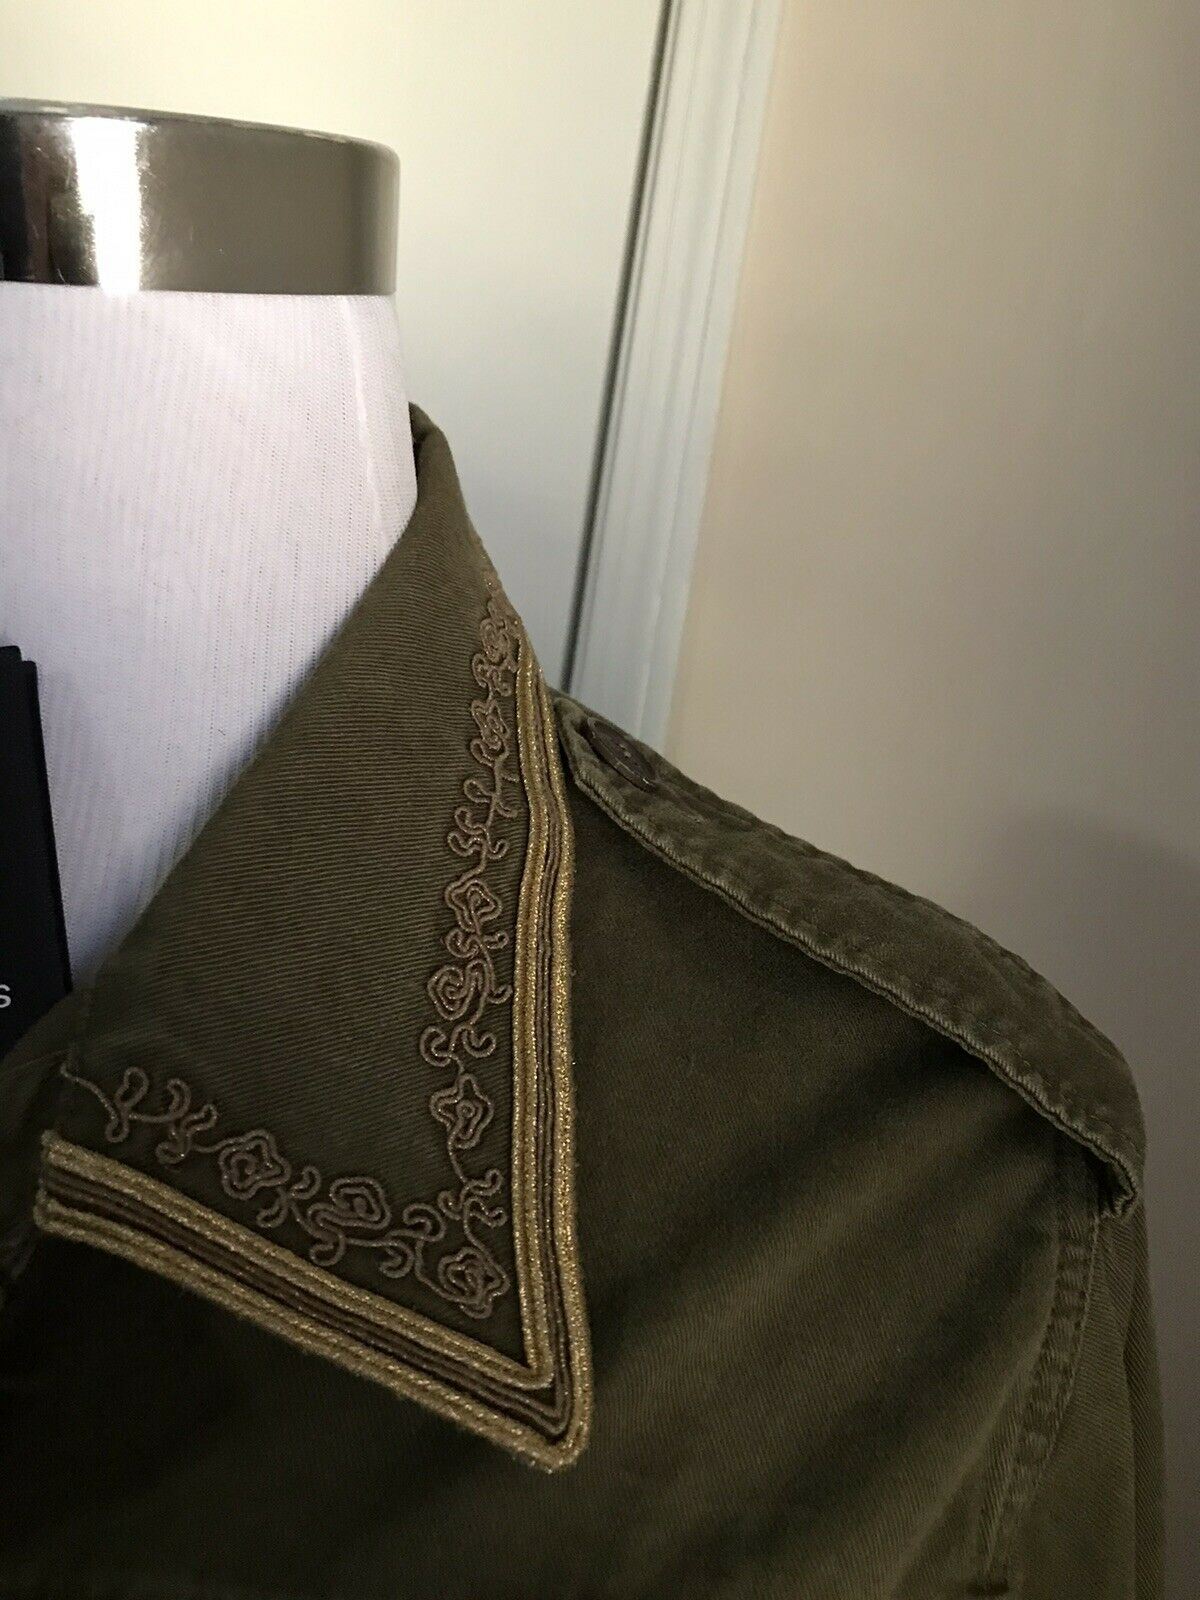 New $2290 Saint Laurent Jacket Coat Green/Kaki 38 US ( 48 Eu ) Italy